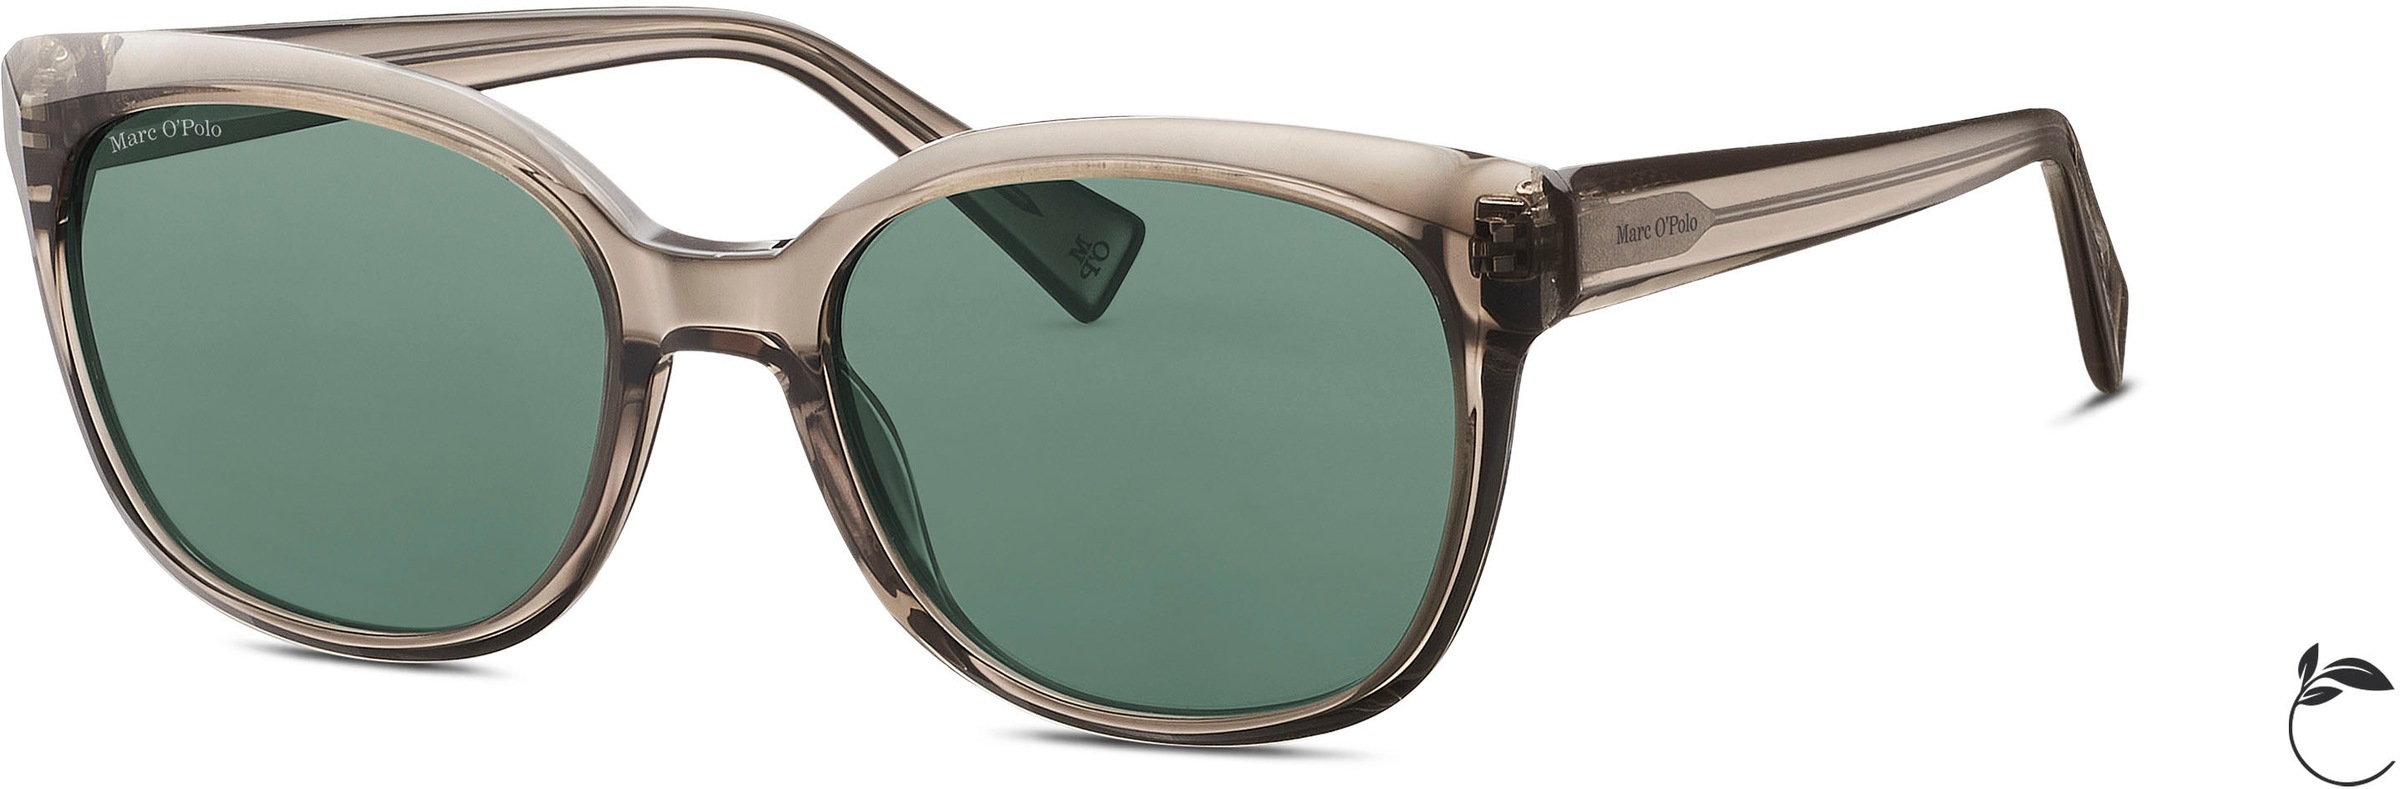 Marc OPolo Sonnenbrille "Modell 506196", Karree-Form